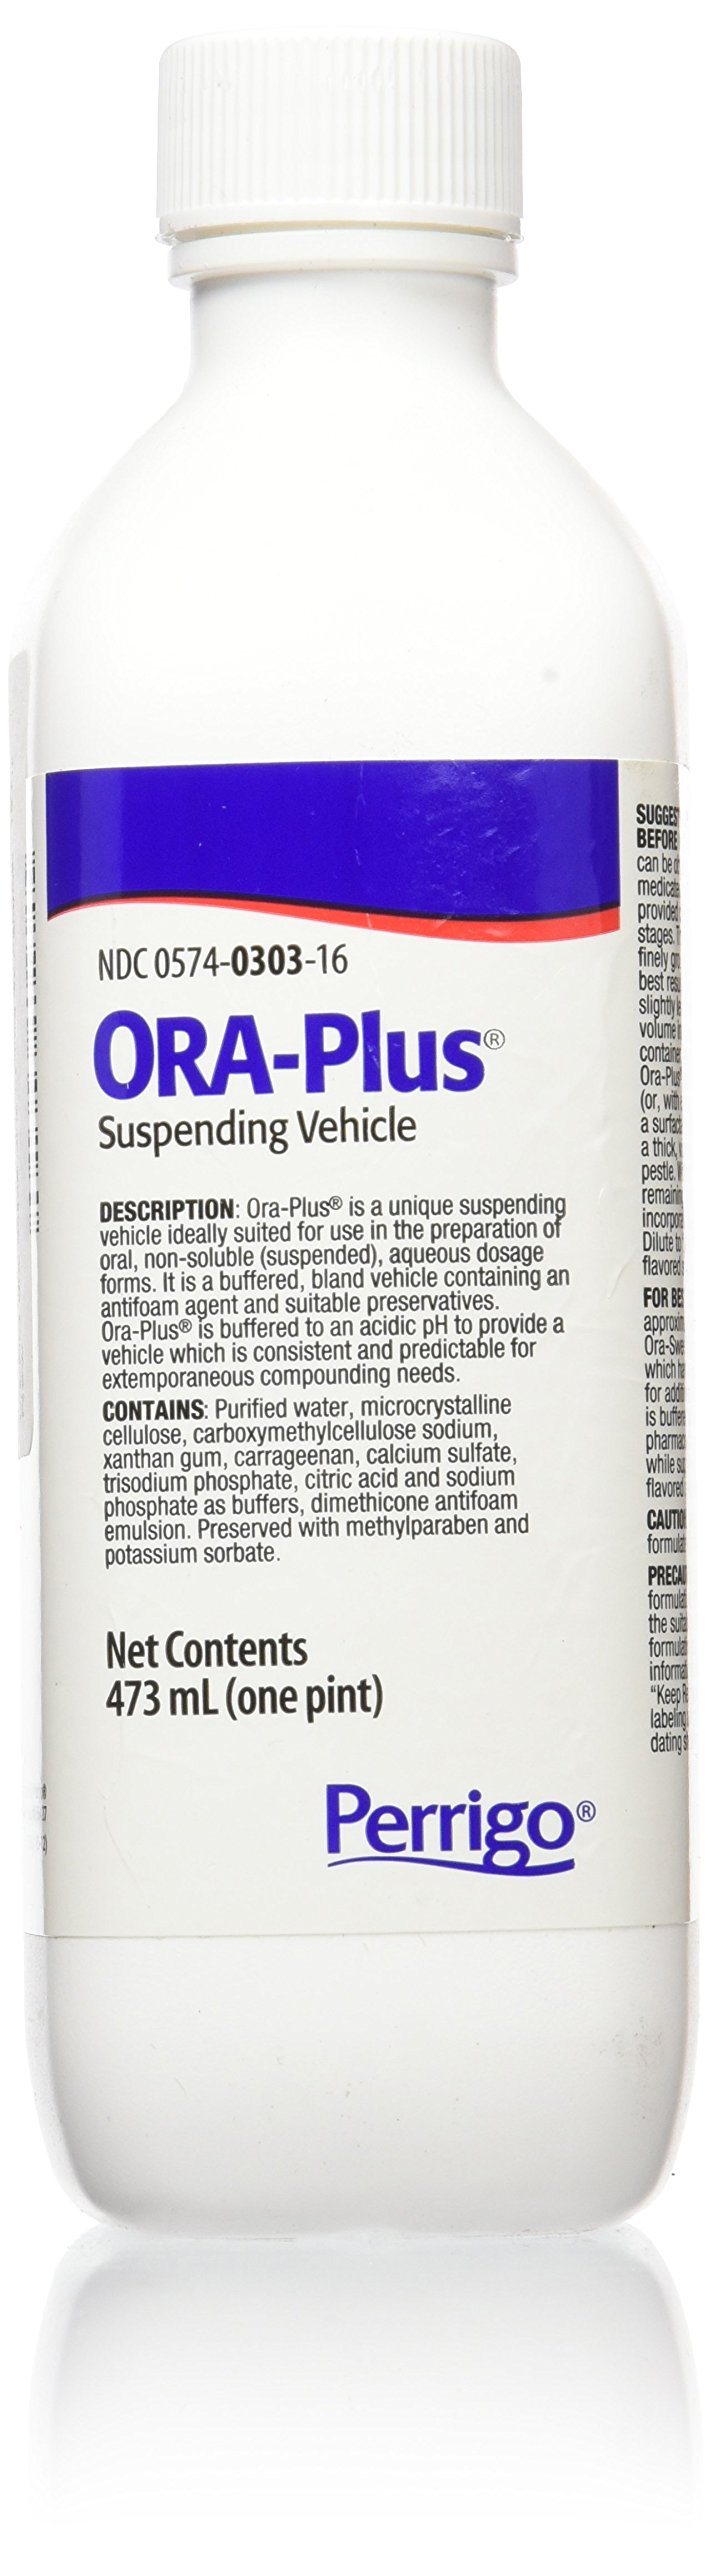 PADDOCK LABORATORIES Ora-Plus Oral Suspending Vehicle, 16 Ounce